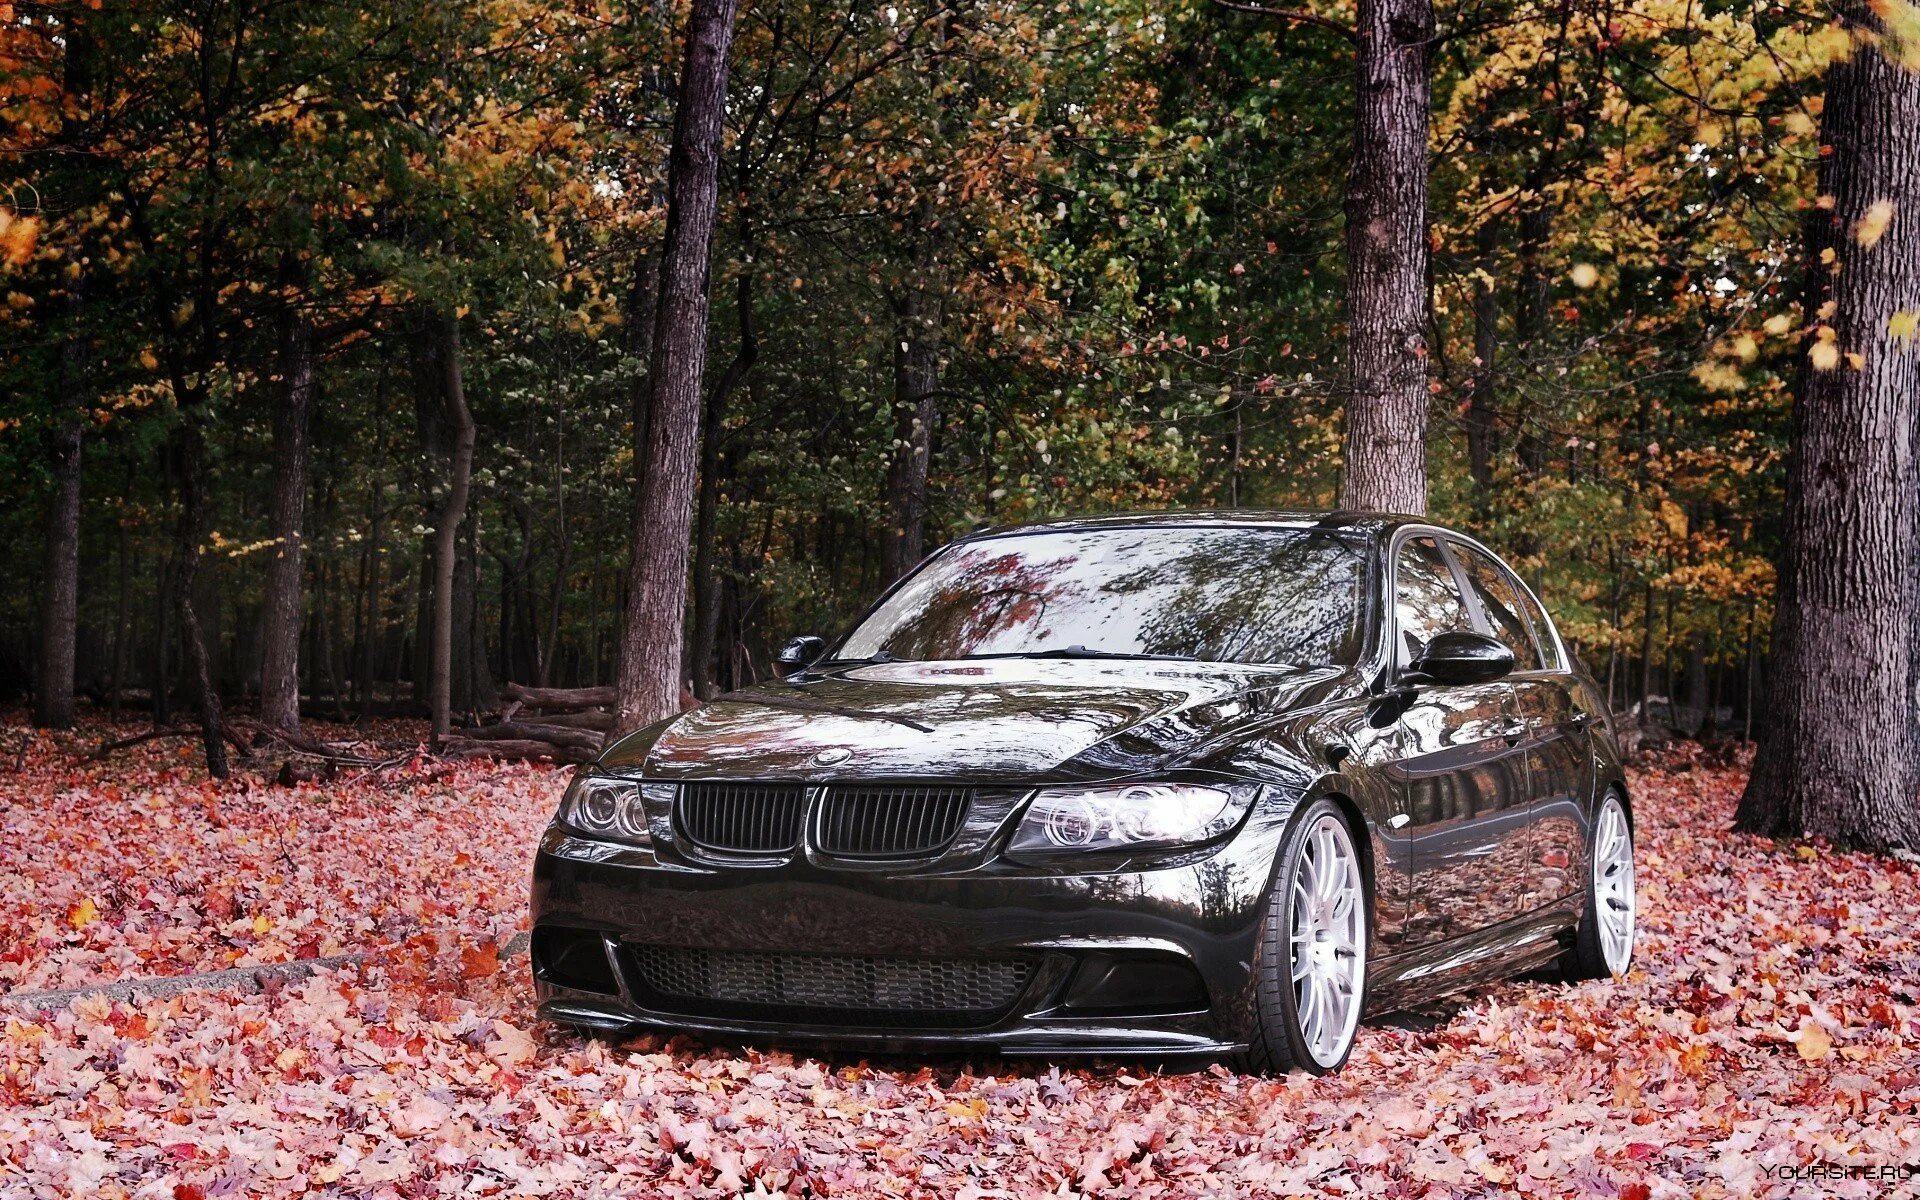 Капот в лесу. БМВ е60 осень. БМВ м5 в лесу. БМВ е60 в лесу. BMW e90 1080.